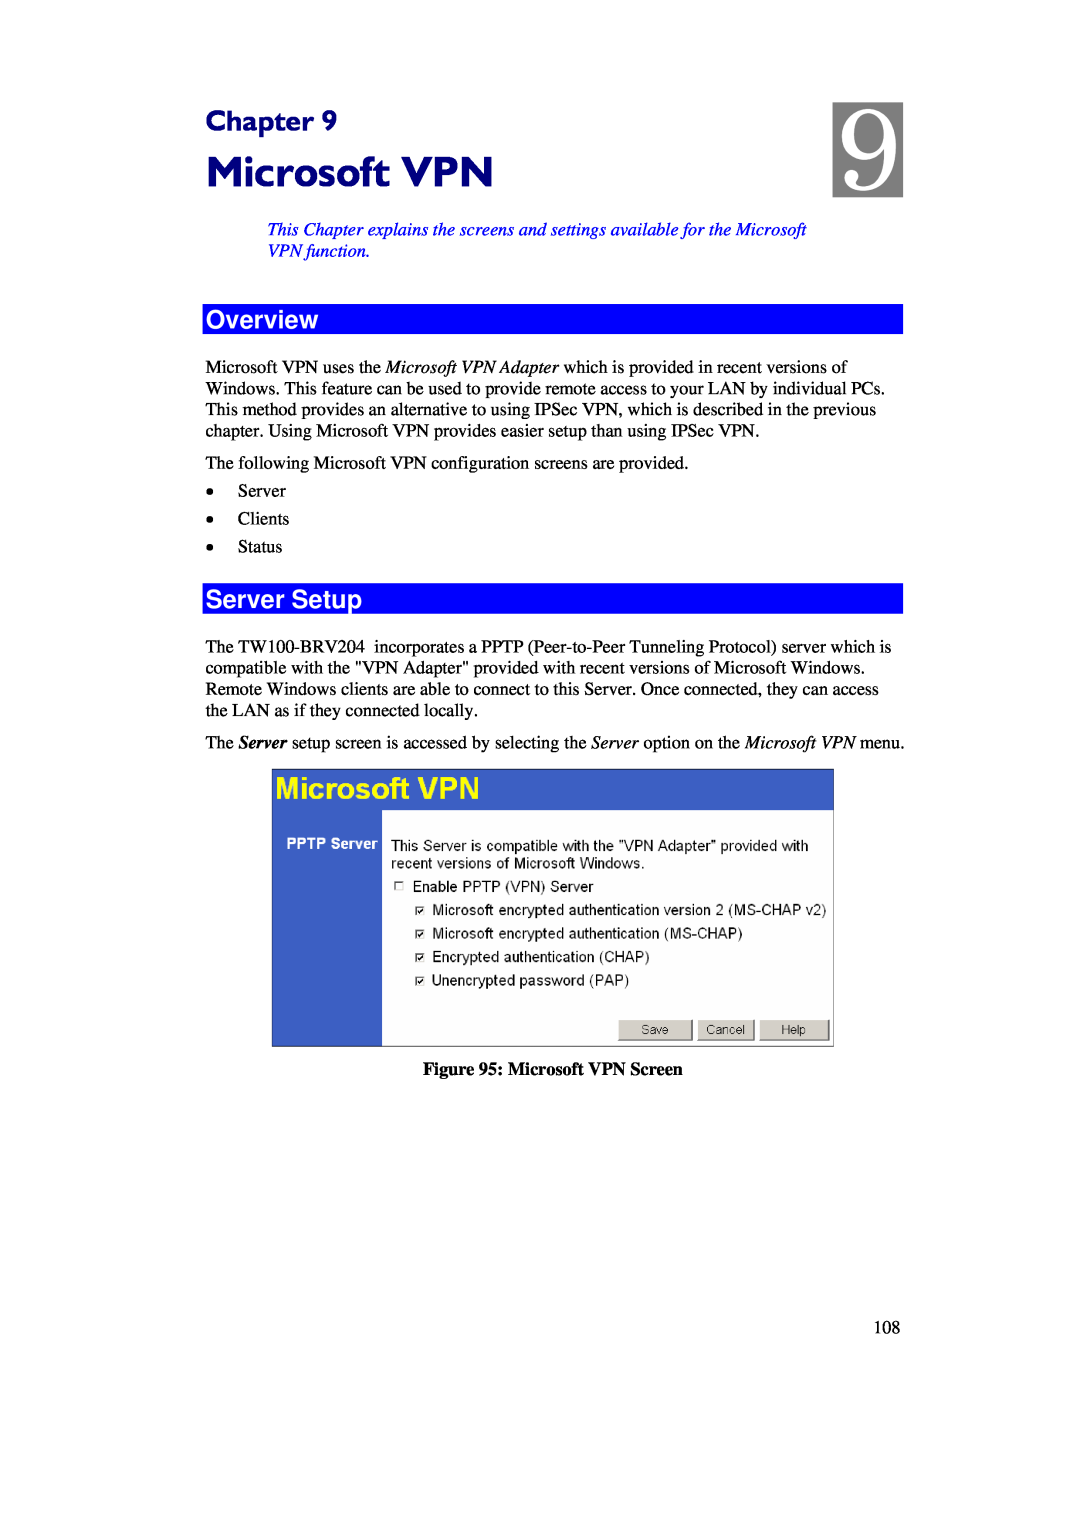 TRENDnet BRV204 manual Server Setup, Chapter, Overview, Microsoft VPN Screen 